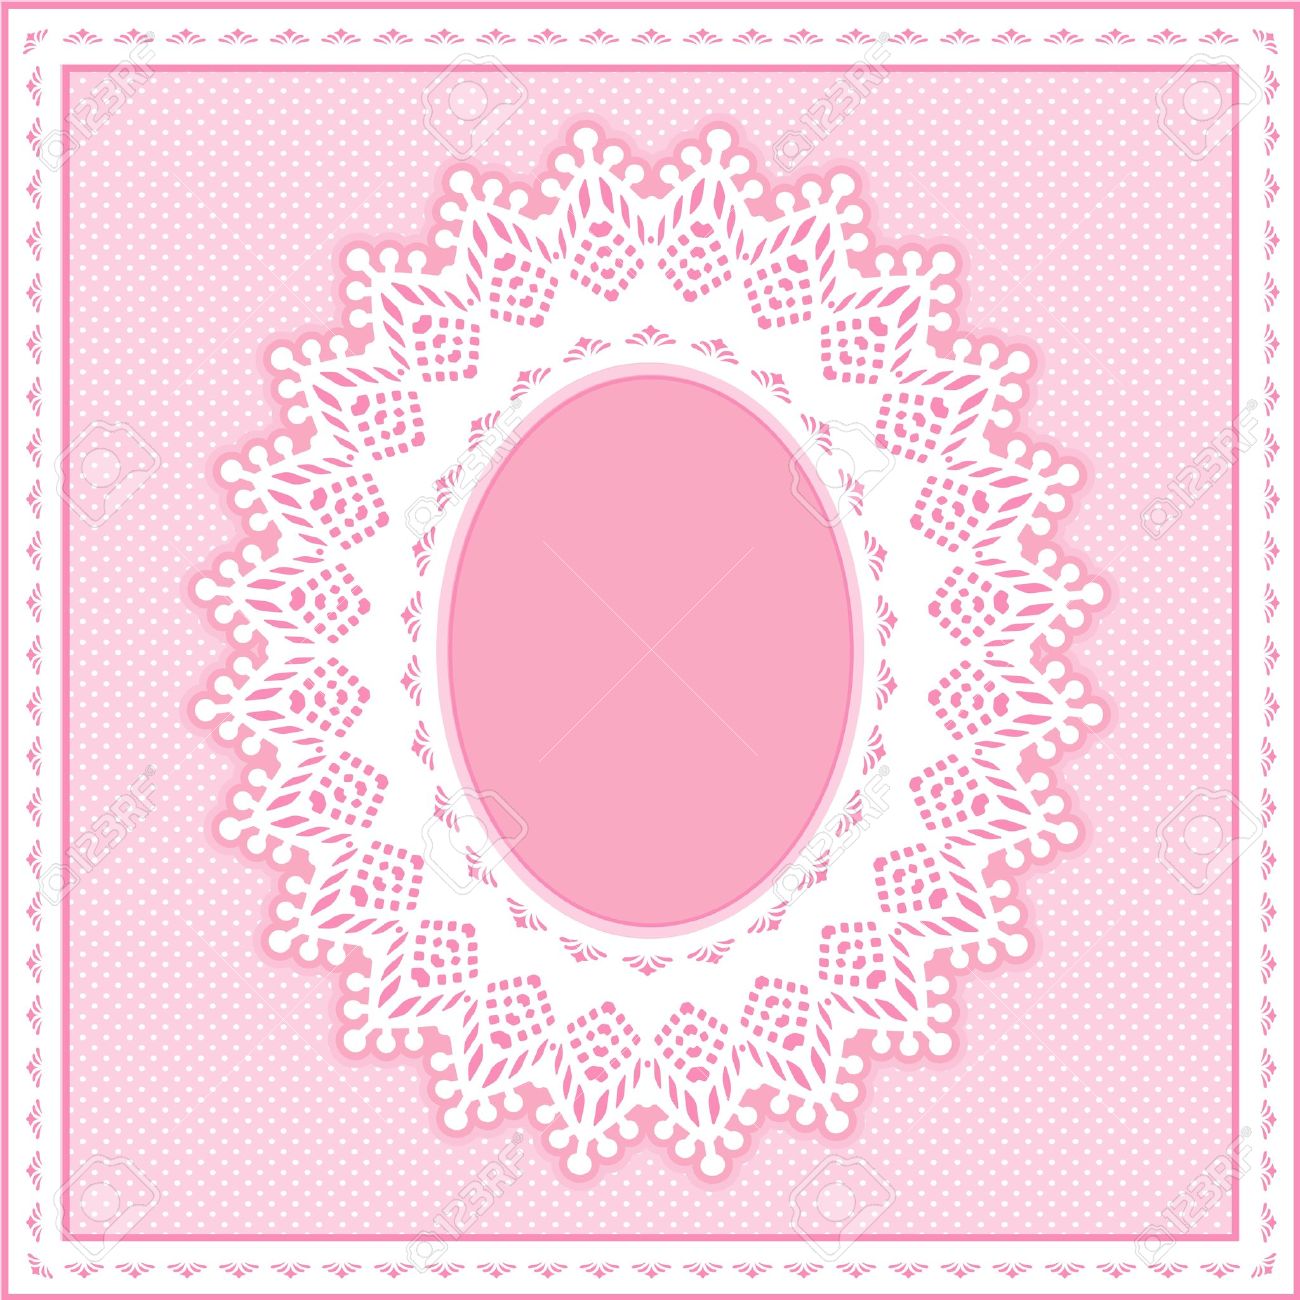 Eyelet Lace Doily Oval Picture Frame On Pastel Pink Polka Dot